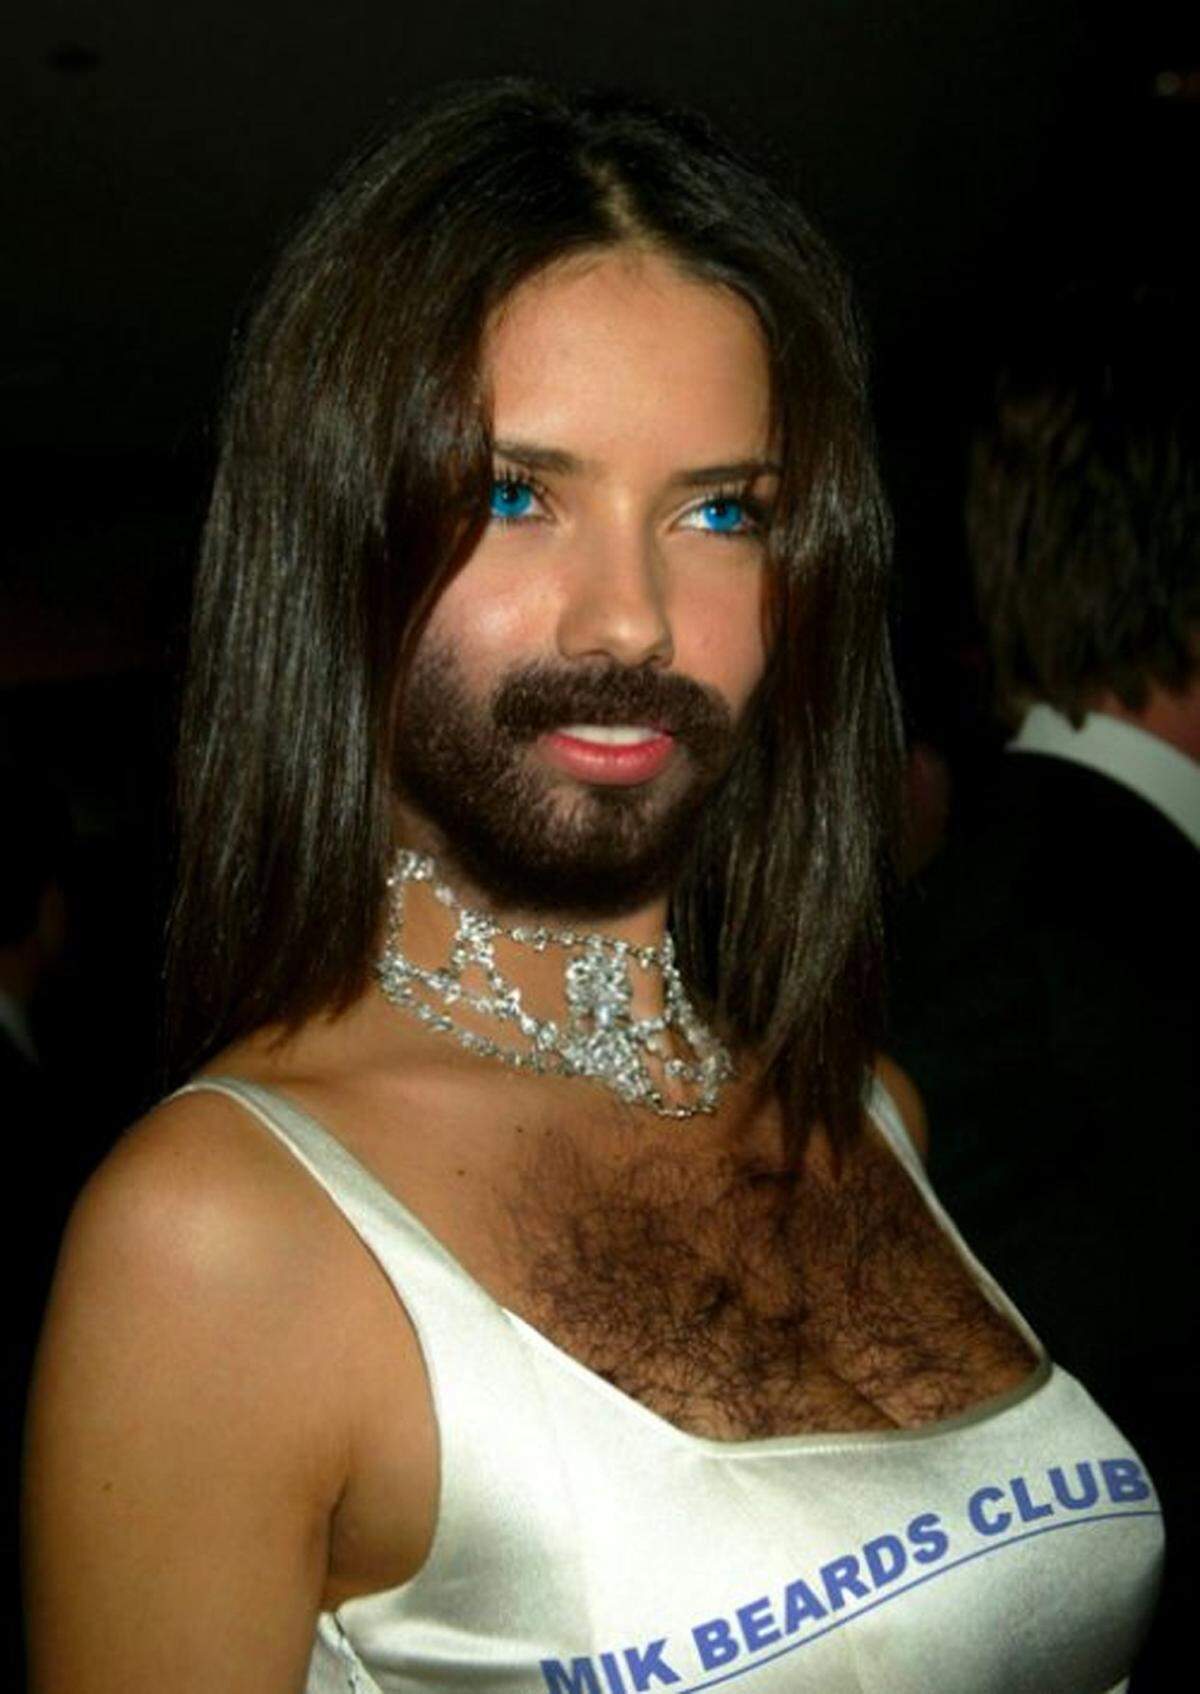 Model Adriana Lima ist sogar "Micks Beard Club" beigetreten.